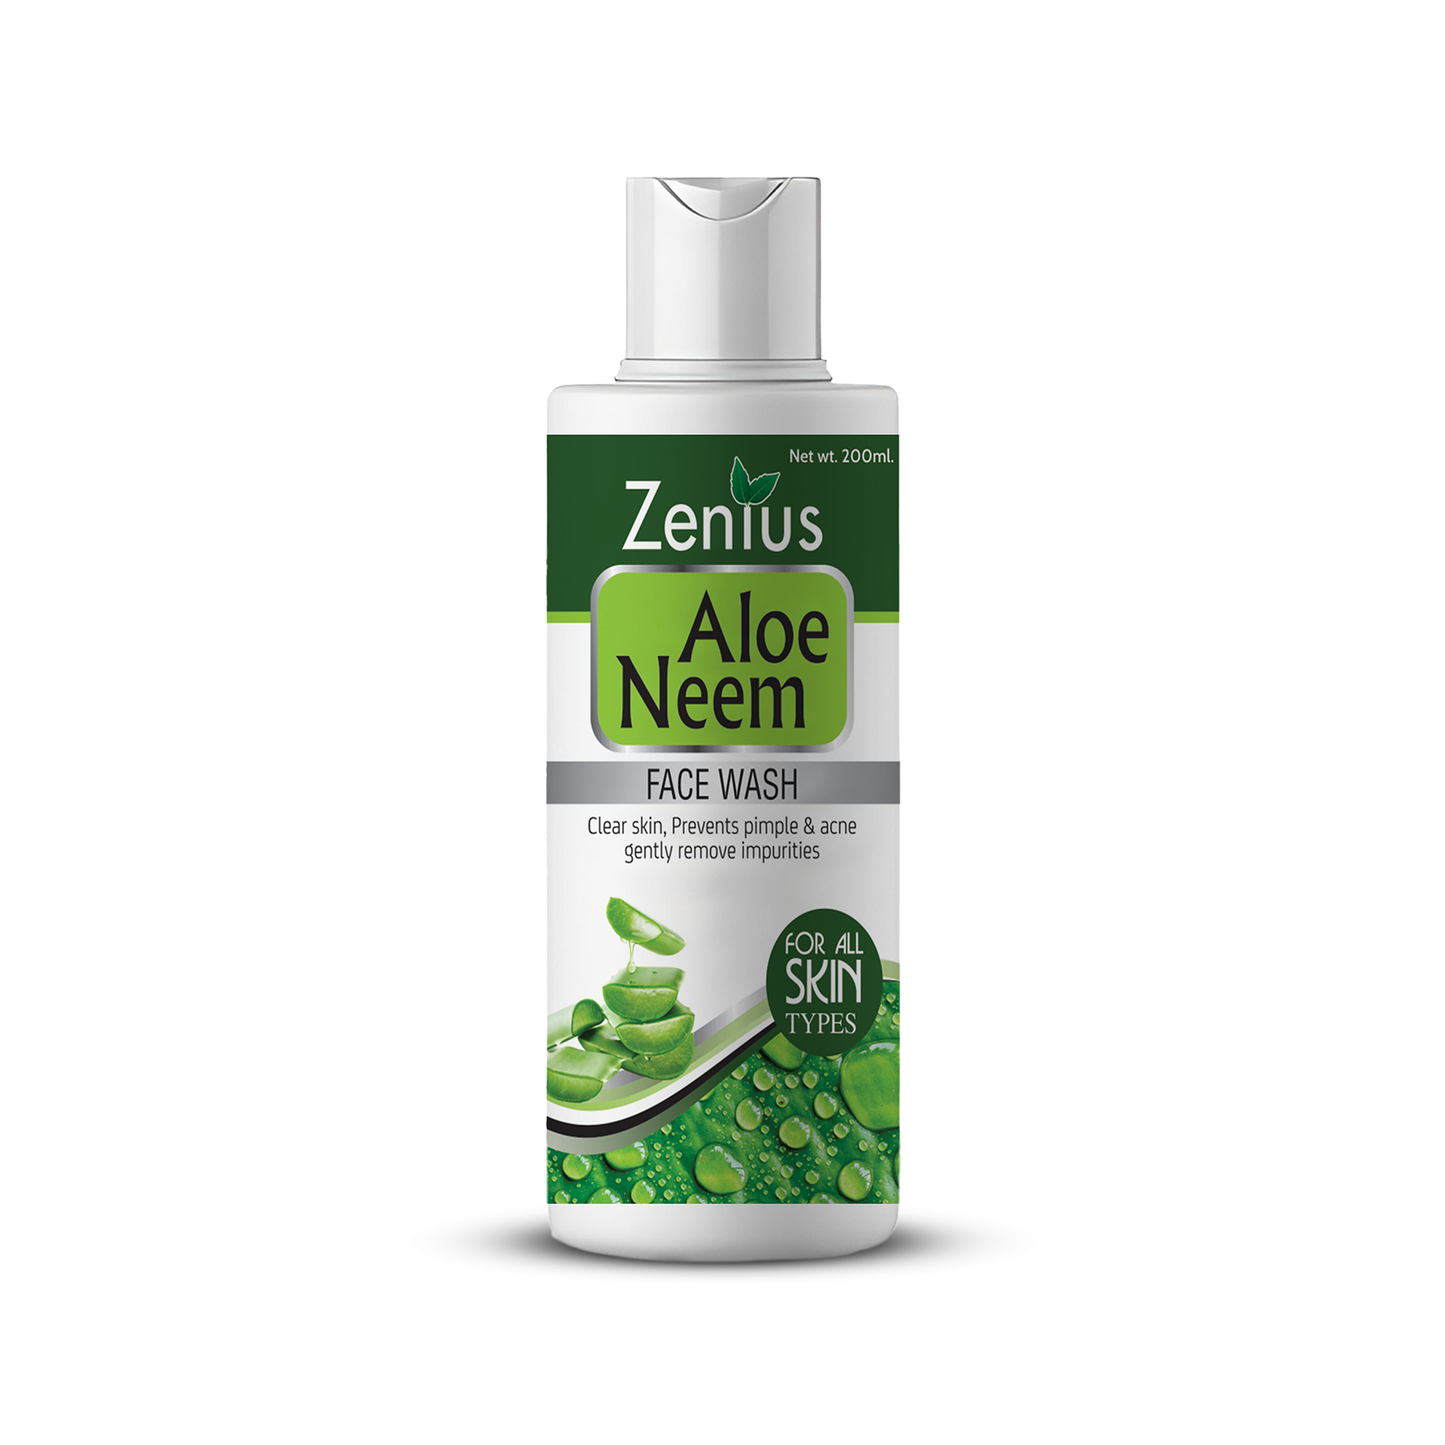 Zenius Aloe Neem Facewash For All Skin Types, 200ml